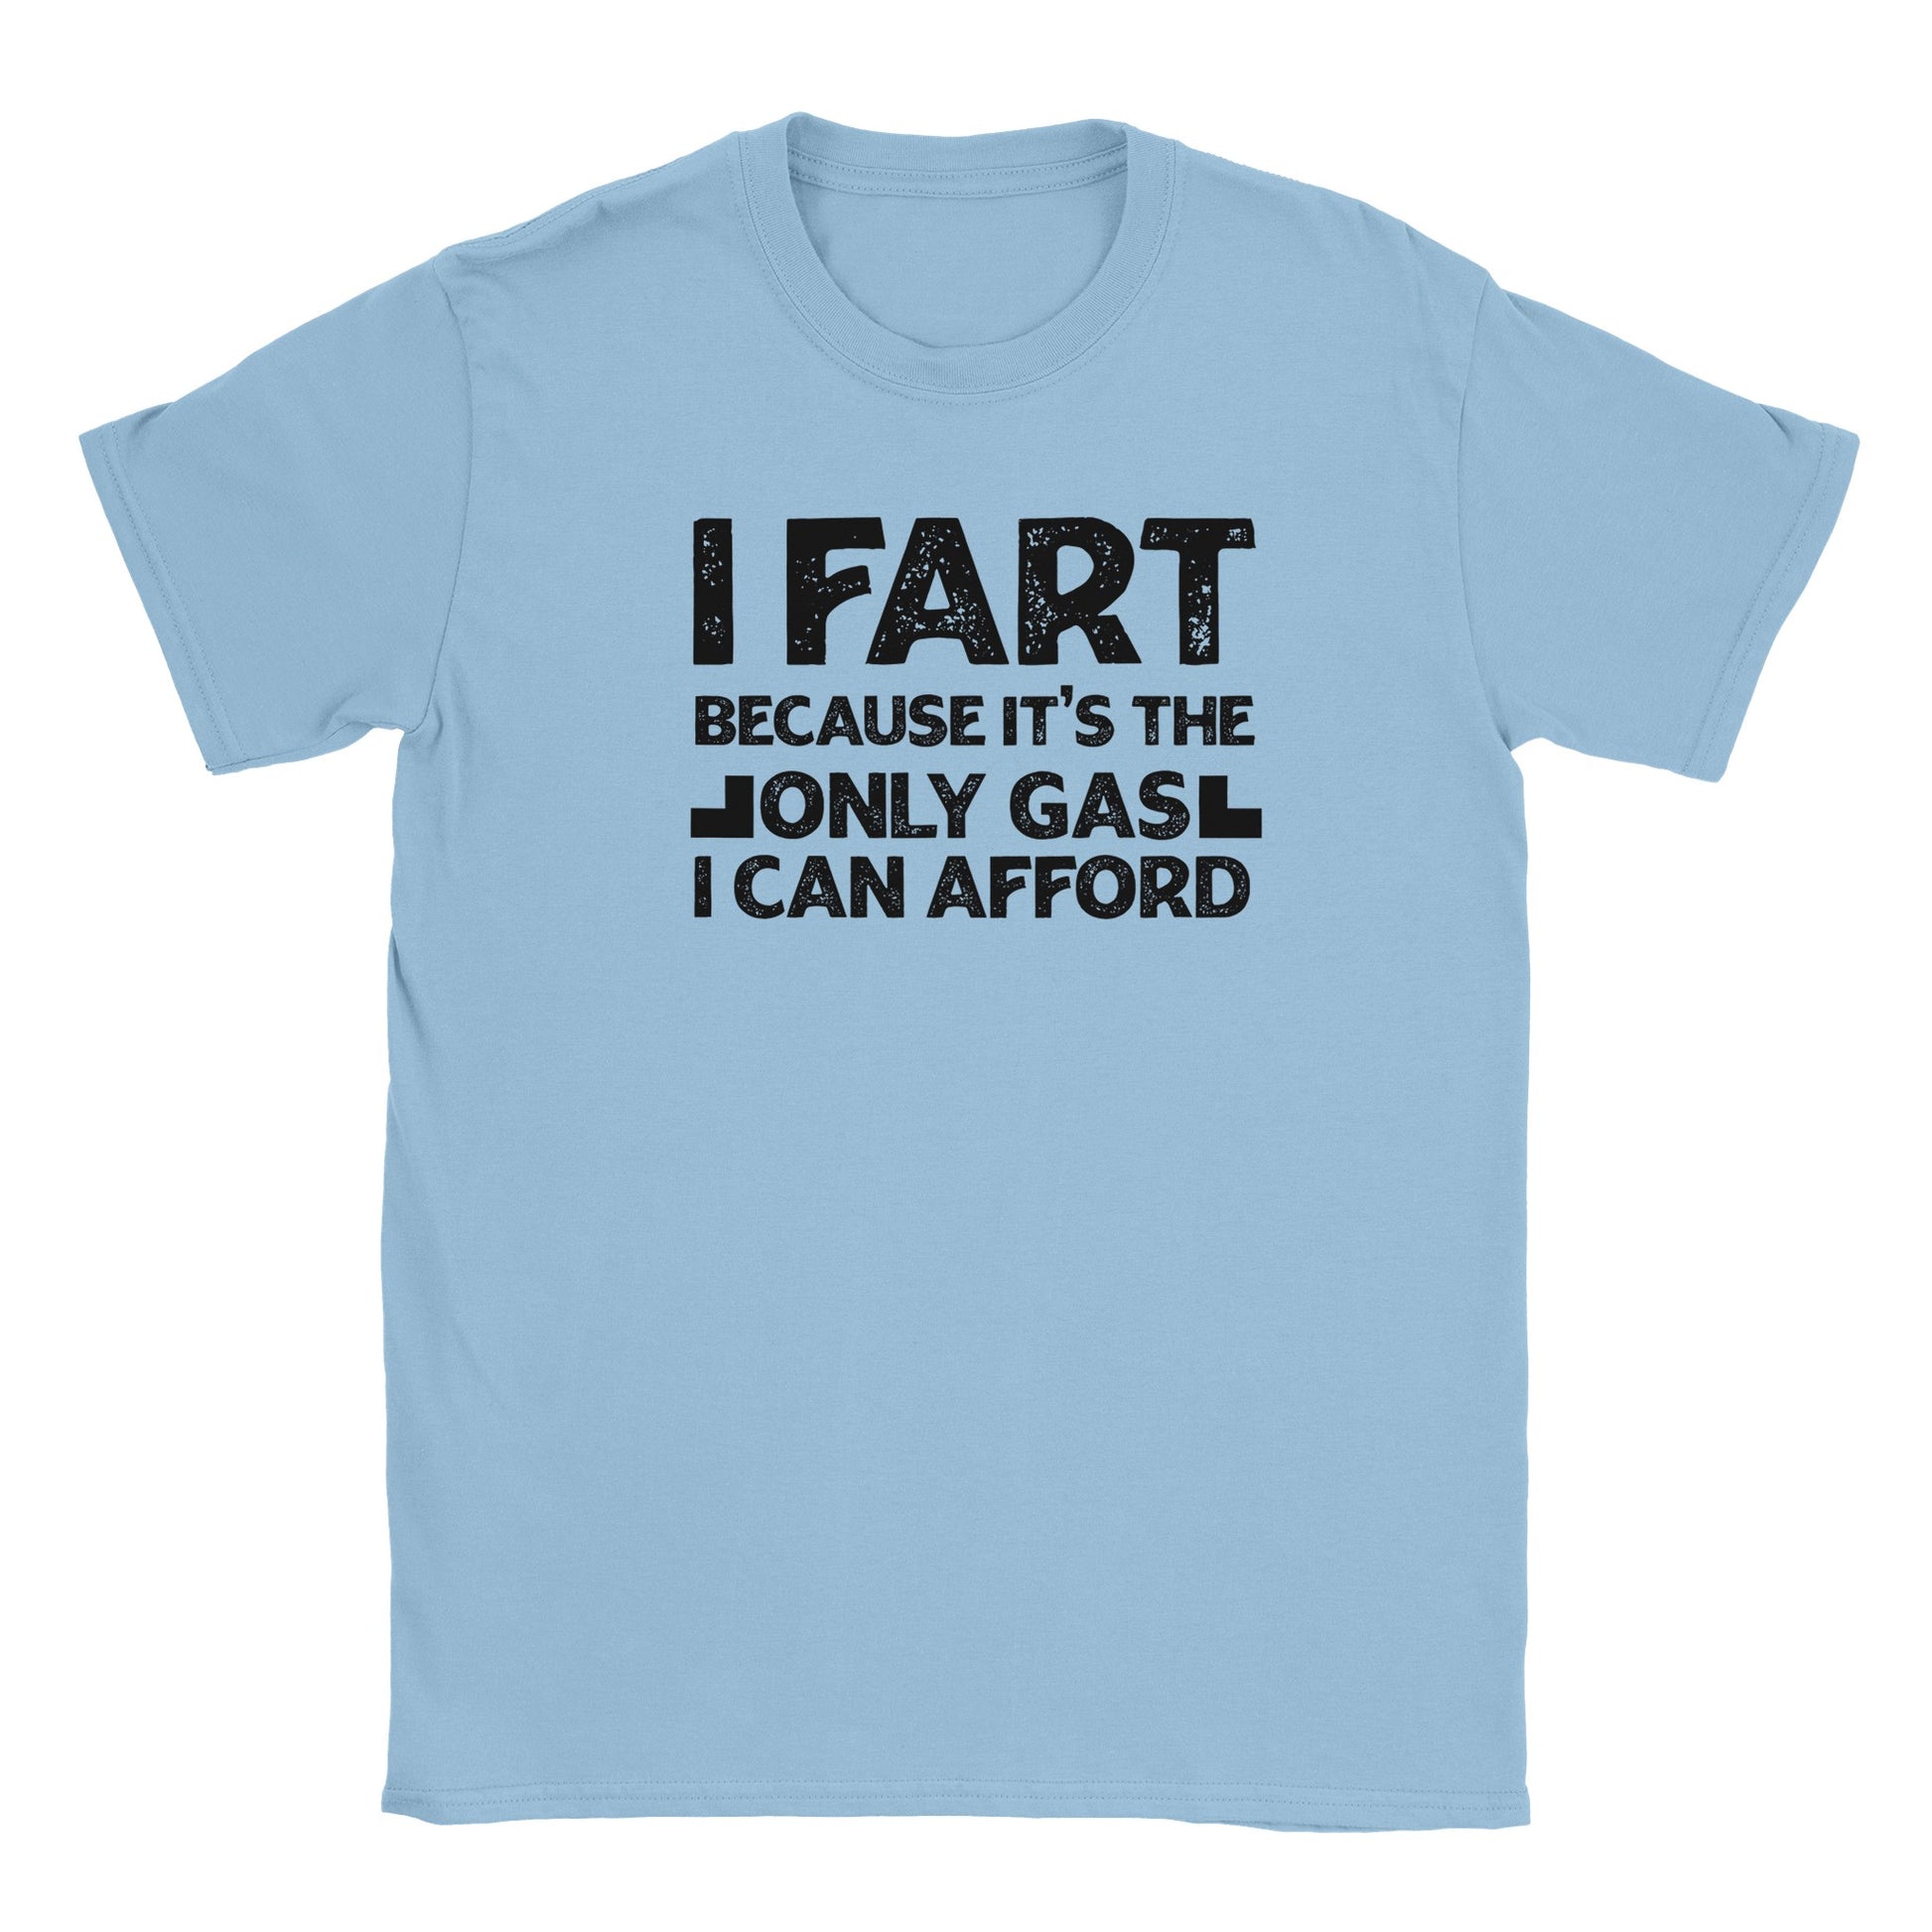 I Fart Because... T-shirt - Mister Snarky's